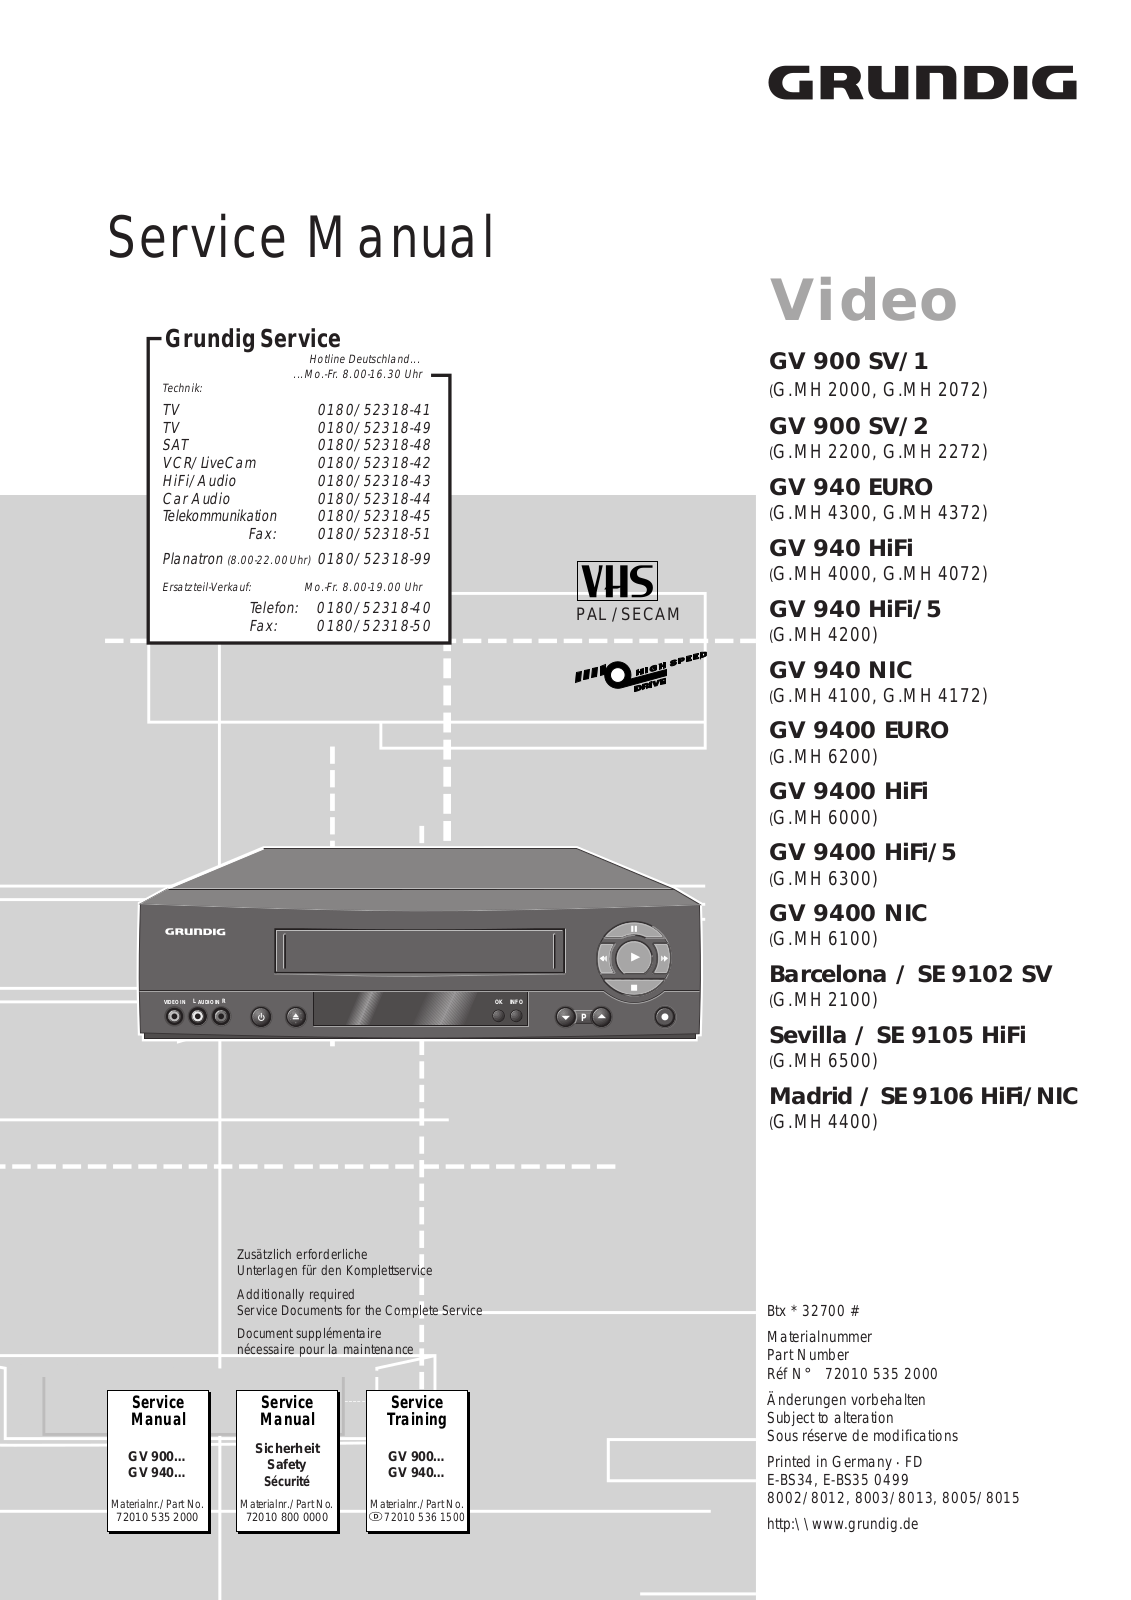 GRUNDIG GV 900 SV/1, GV 900 SV/2, GV 940 EURO, GV 940 HiFi, GV 940 HiFi/5 Service Manual